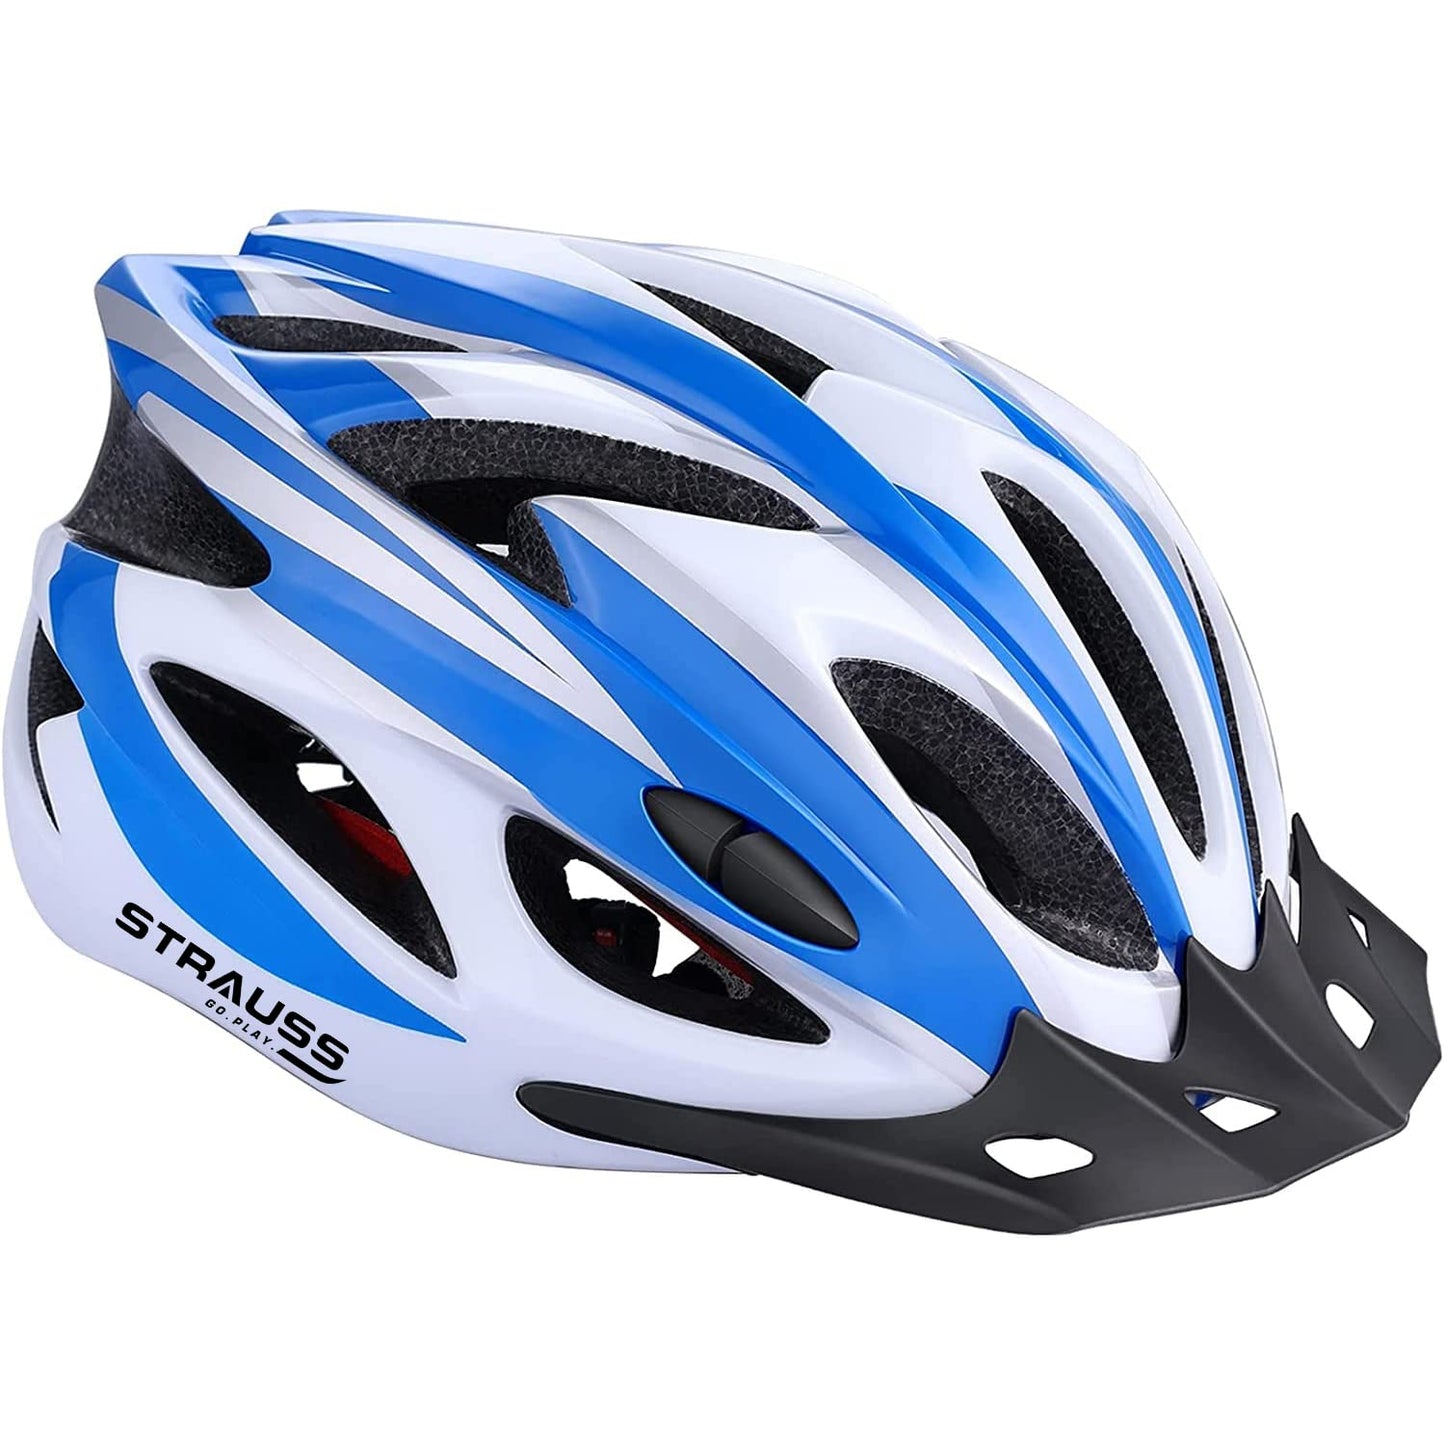 Strauss Cycling Helmet